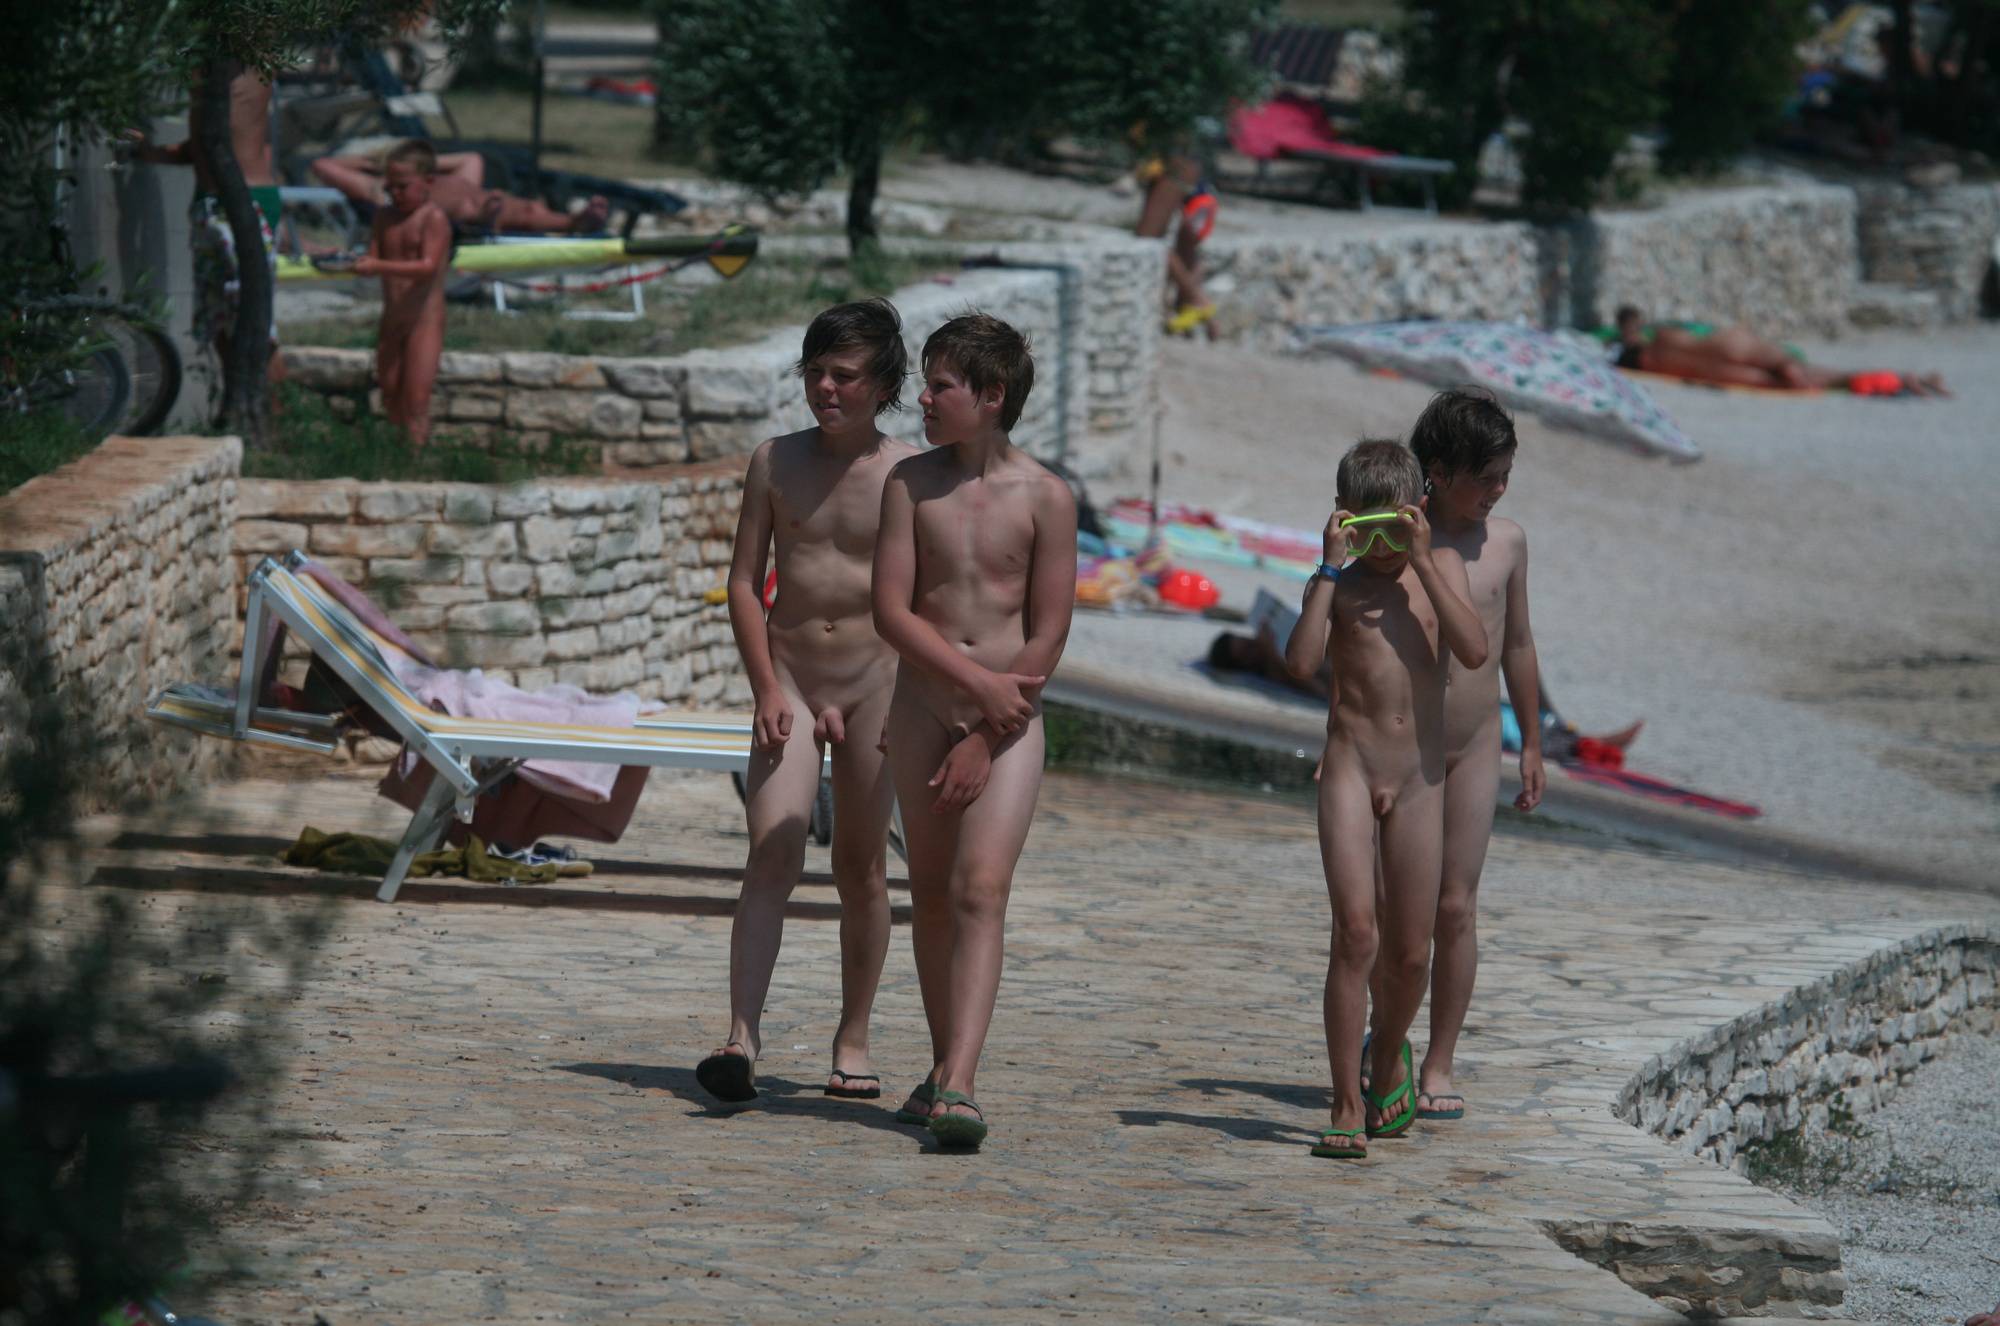 Young Pure Nudism - Boy Nudist Shore Walking - 1